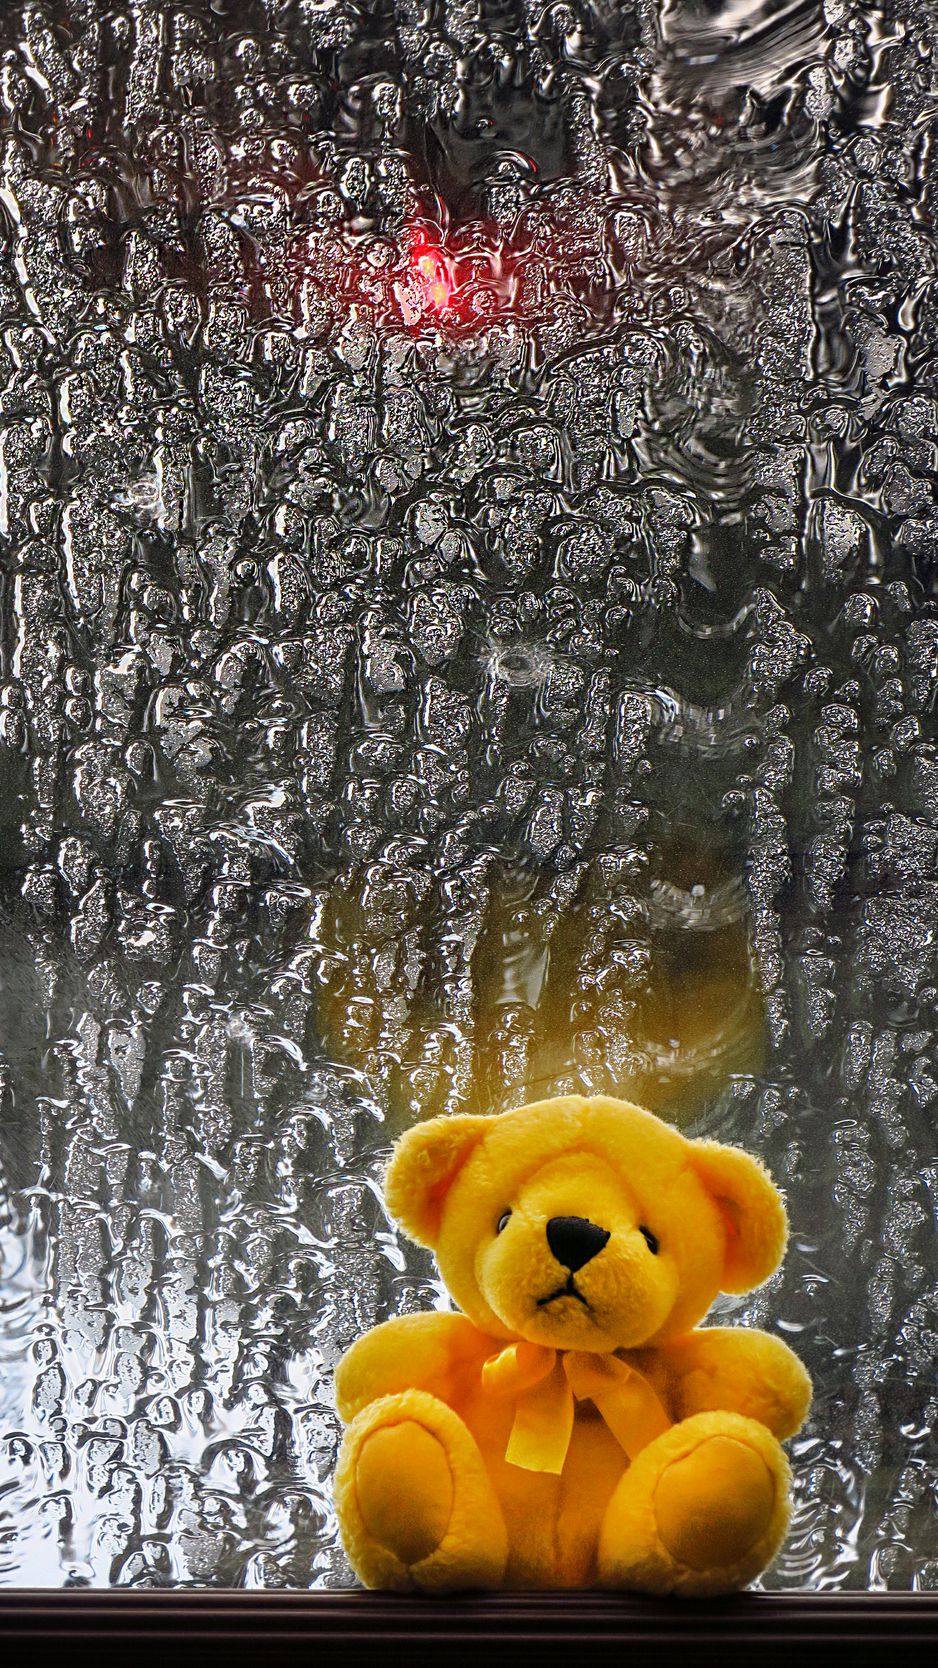 33,988 Teddy Bear Wallpaper Images, Stock Photos & Vectors | Shutterstock